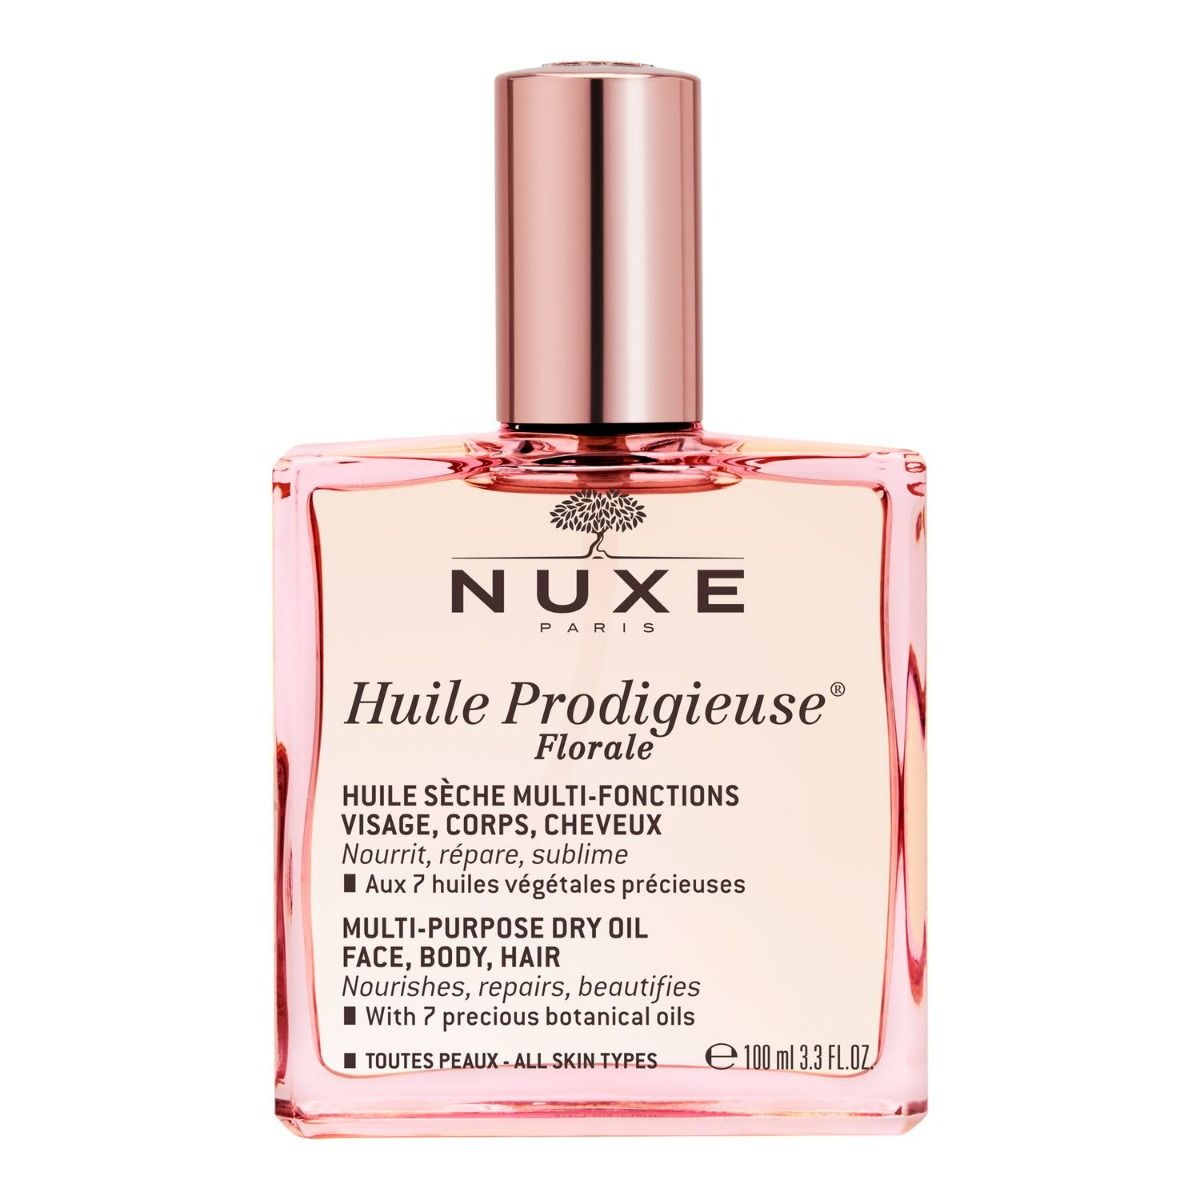 Nuxe Huile Prodigieuse Florale масло для лица, тела и волос, 100 ml нюкс продижьёз florale масло сух цветочное 100мл